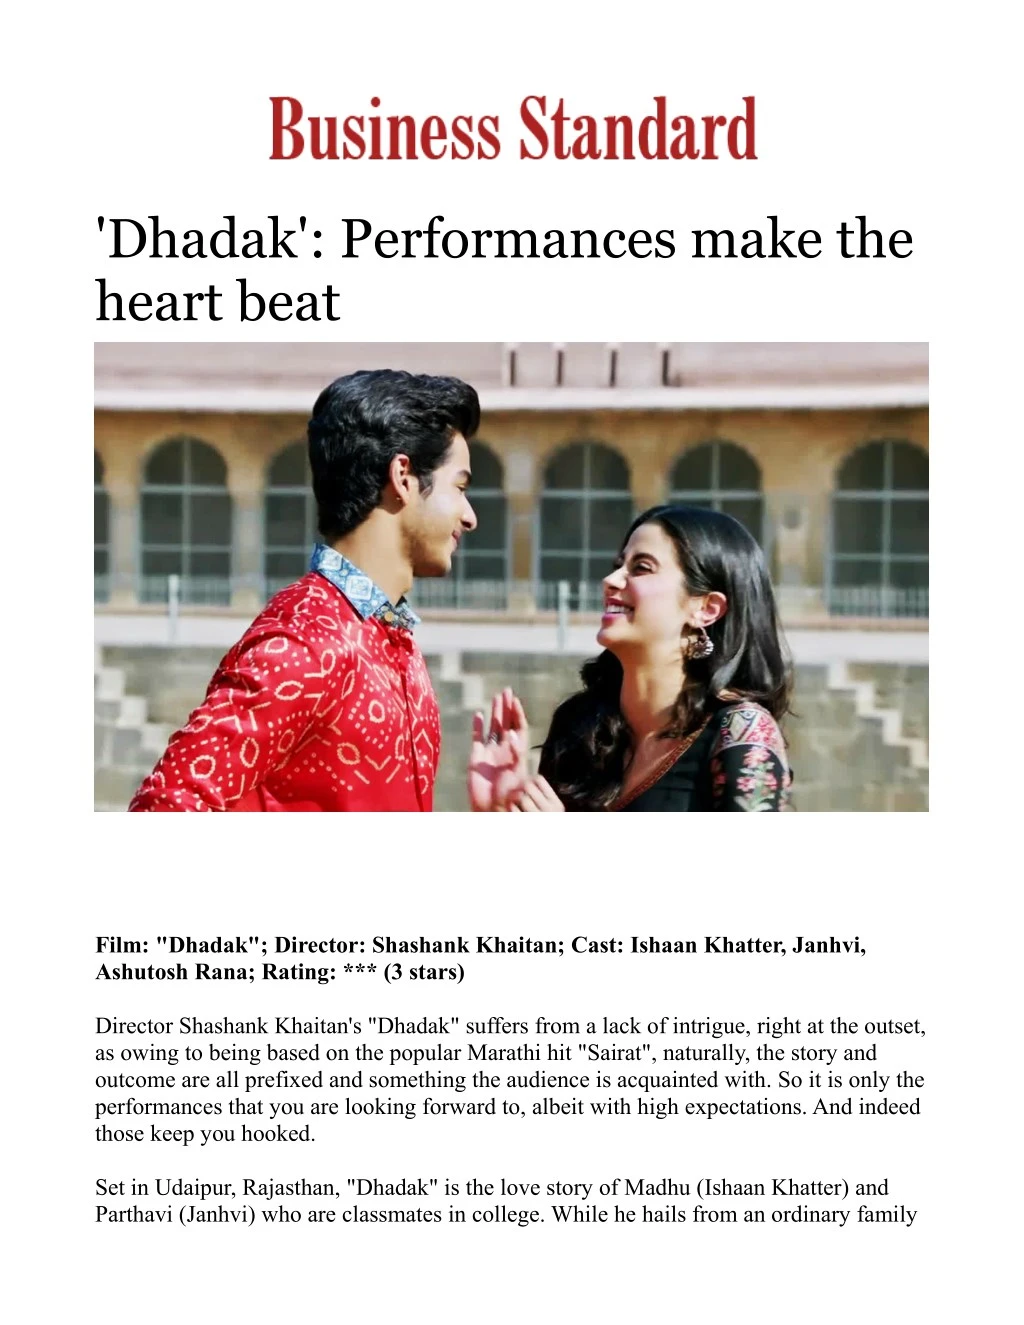 dhadak performances make the heart beat